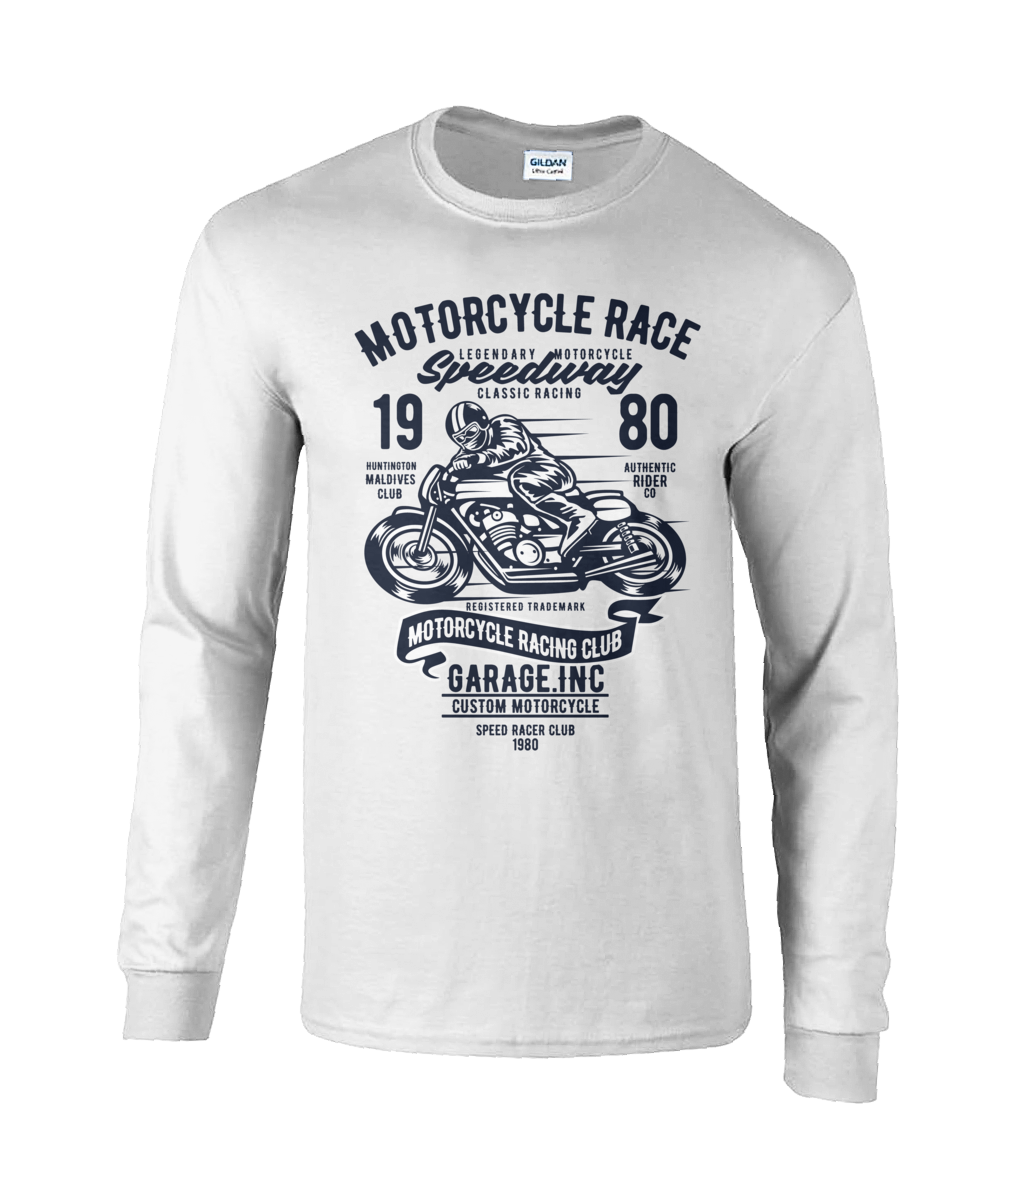 Motorcycle Race – Ultra Cotton Long Sleeve T-shirt